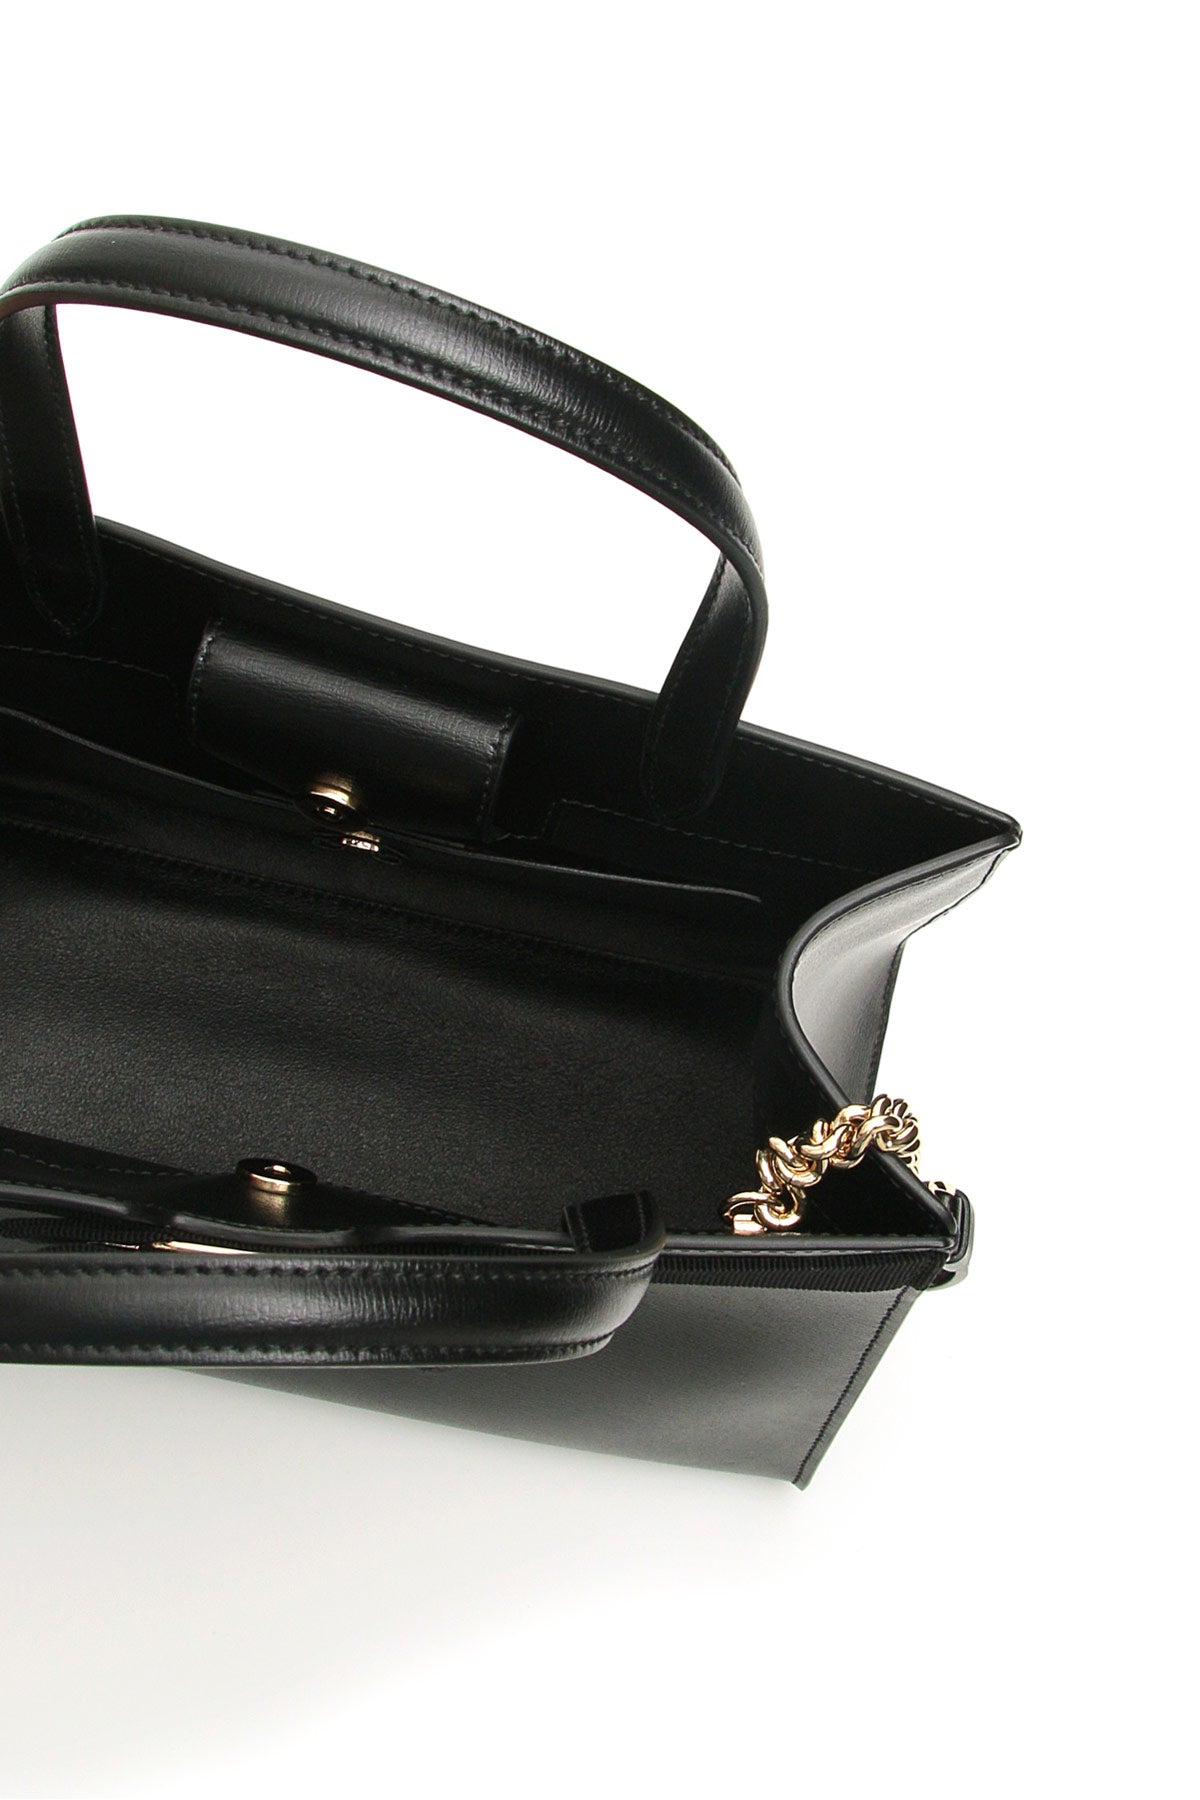 FERRAGAMO Luxurious Iconic Black Vara Handbag for Women